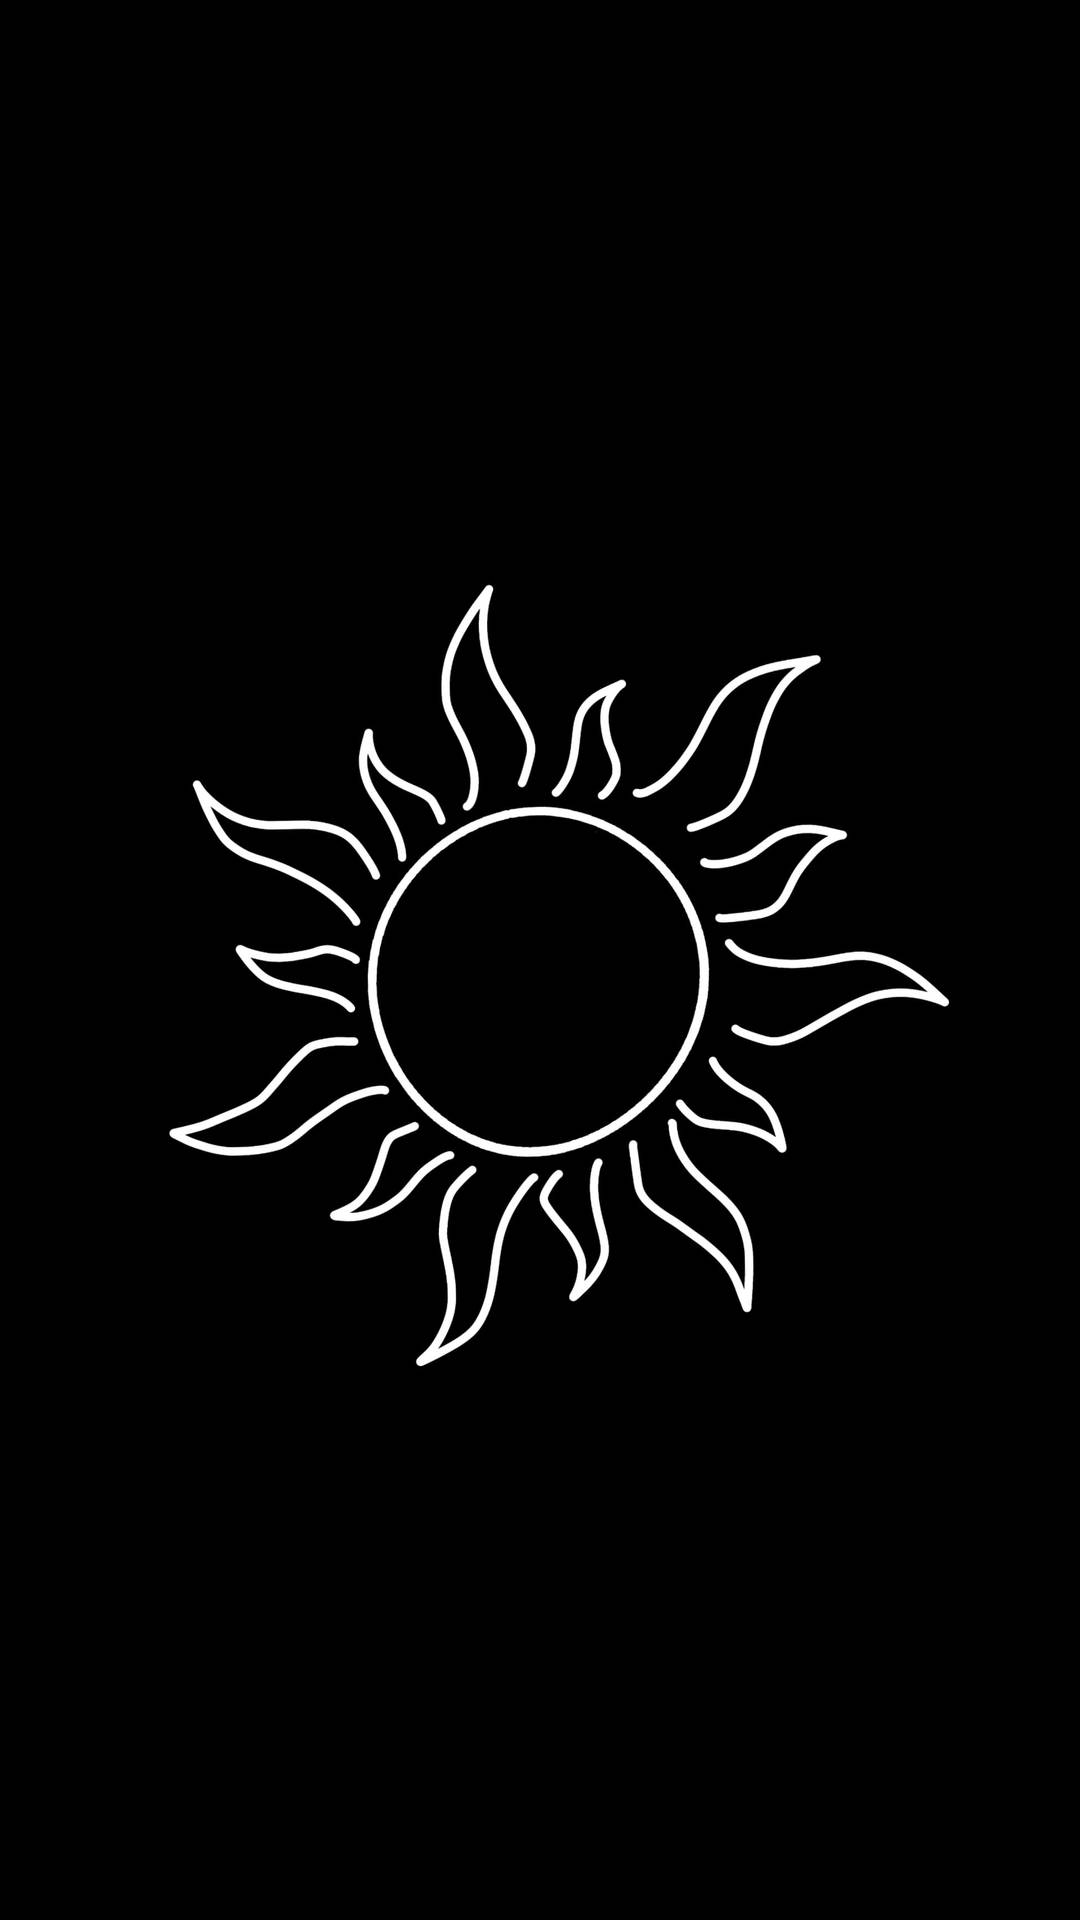 Sun Symbol Minimalist Black Phone Wallpaper